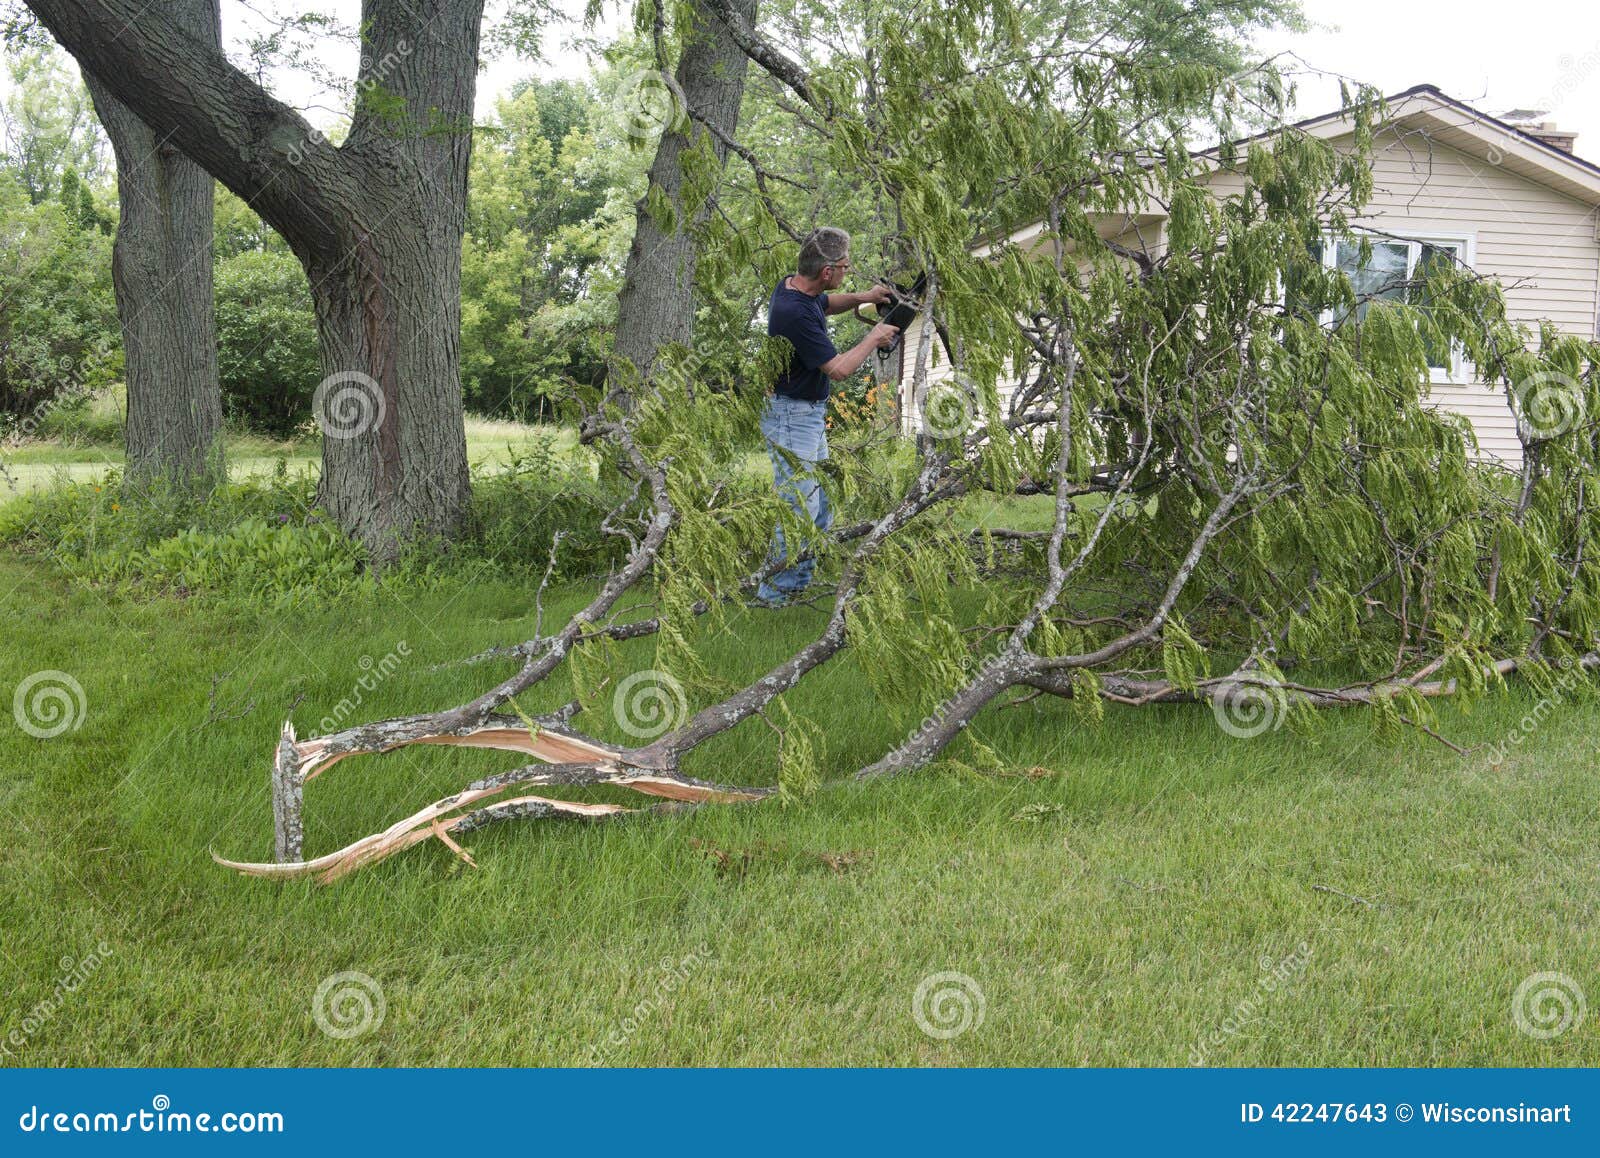 tornado wind storm damage man chainsaw downed tree